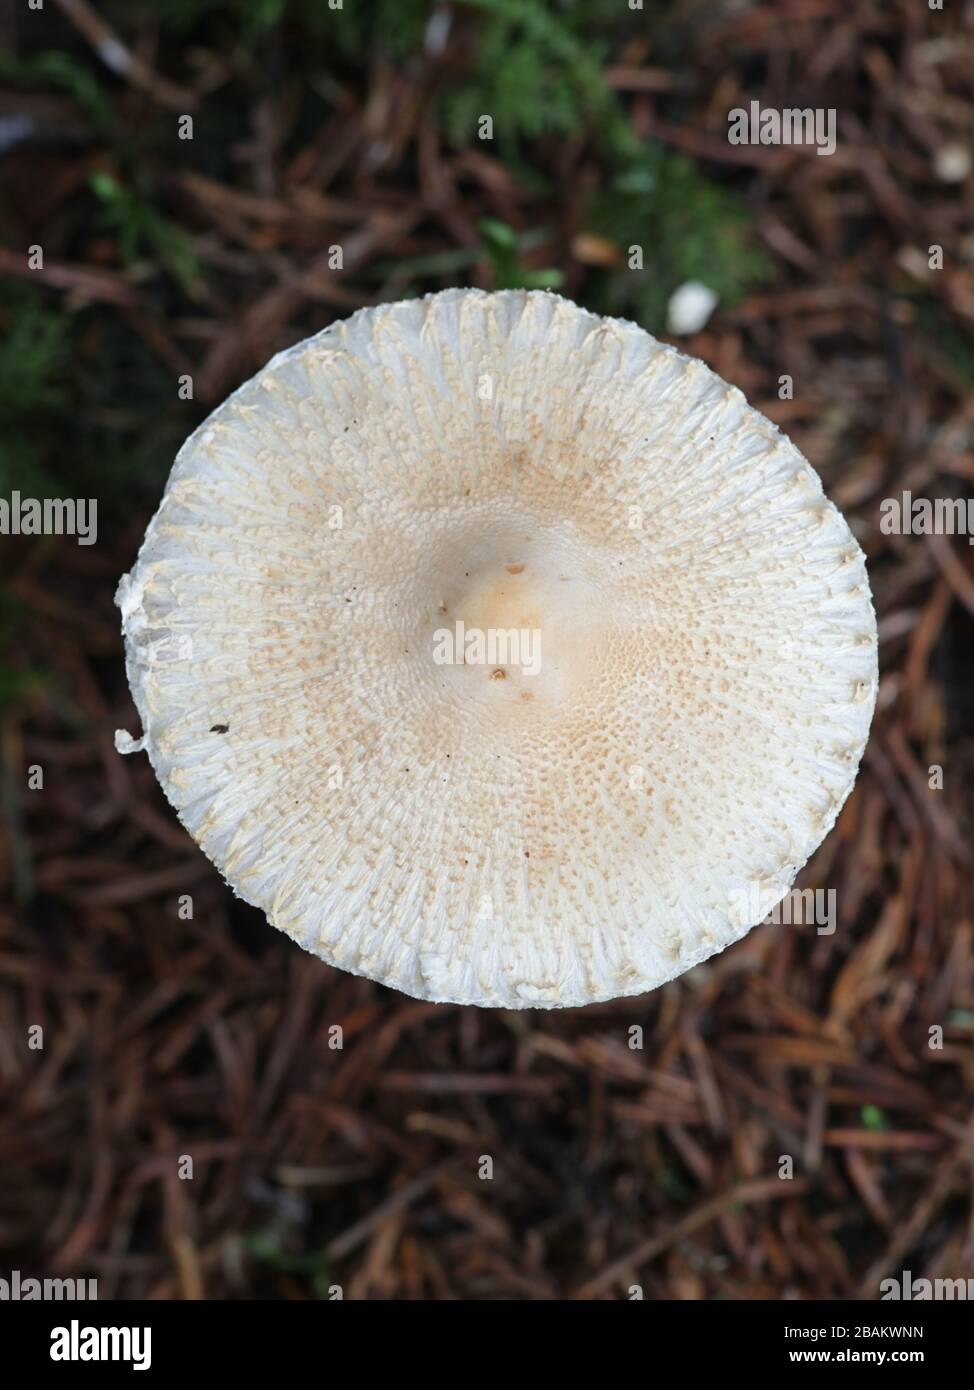 Lepiota clypeolaria, conocida como el escudo dapperling o la Lepiota de tallos chelosos, hongos venenosos de Finlandia Foto de stock